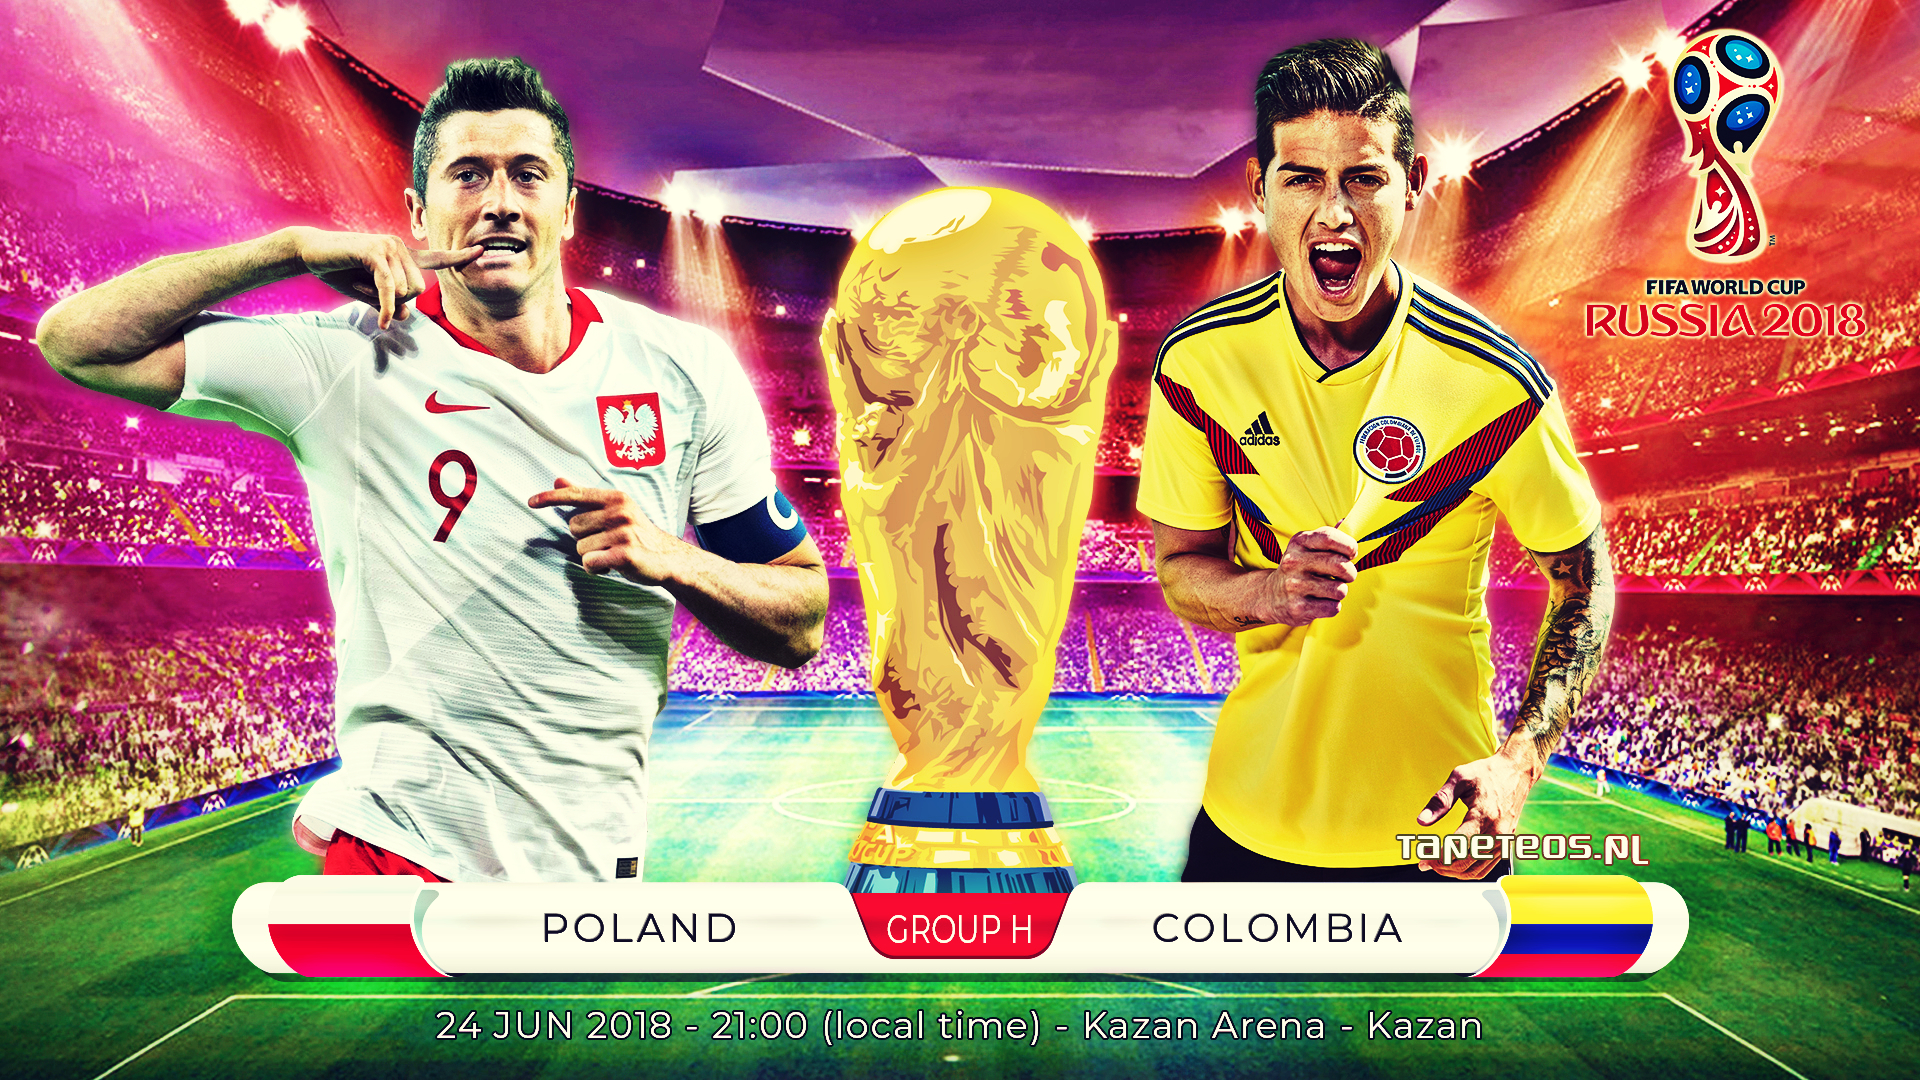 FIFA World Cup Russia 2018 035 24.06.2018 Mecz Polska - Kolumbia, Robert Lewandowski, James Rodriguez